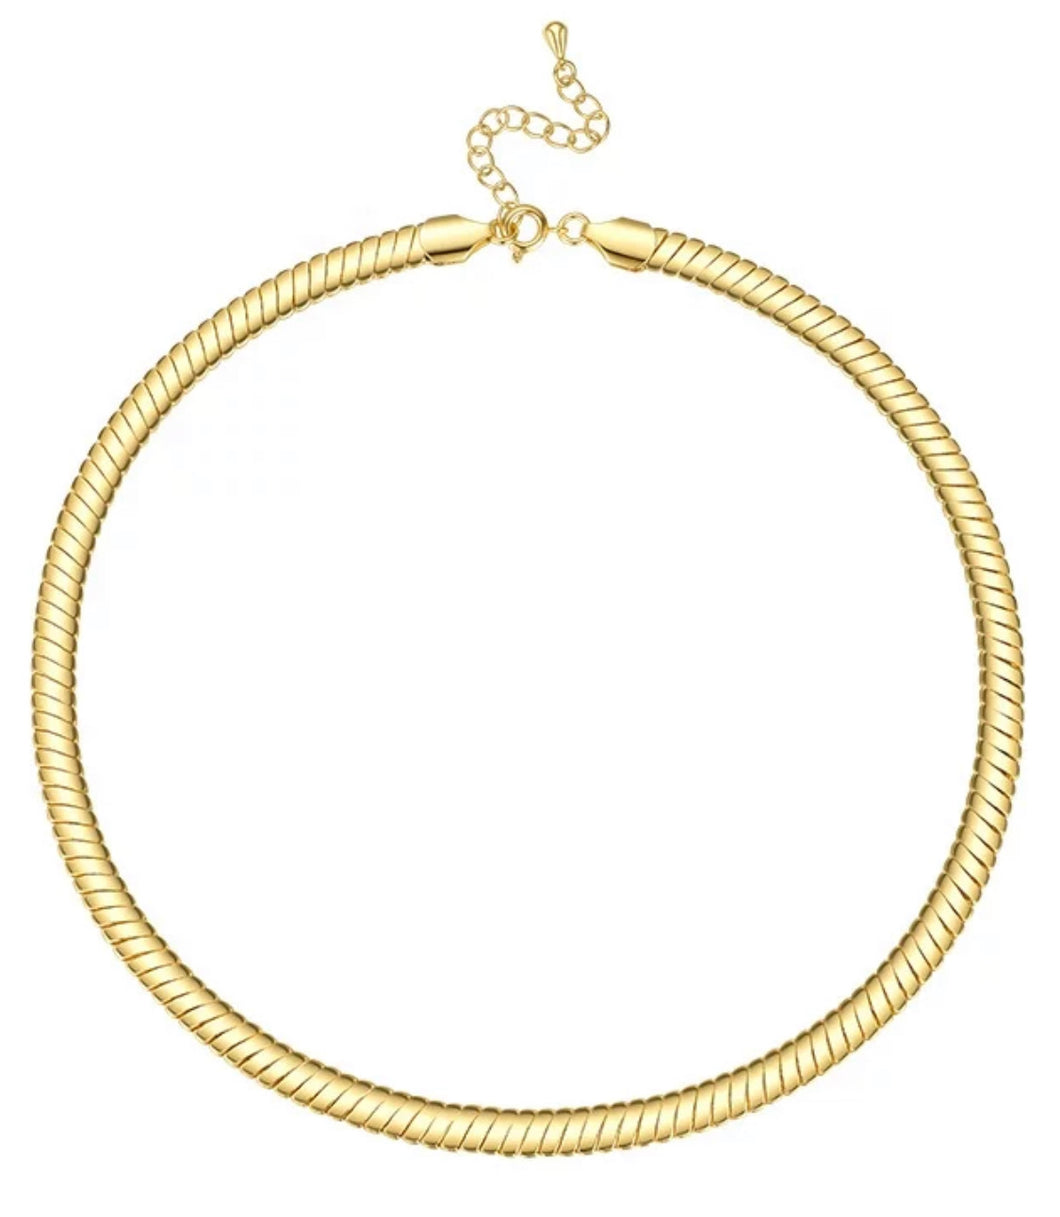 Snake chain 18 karat gold necklace